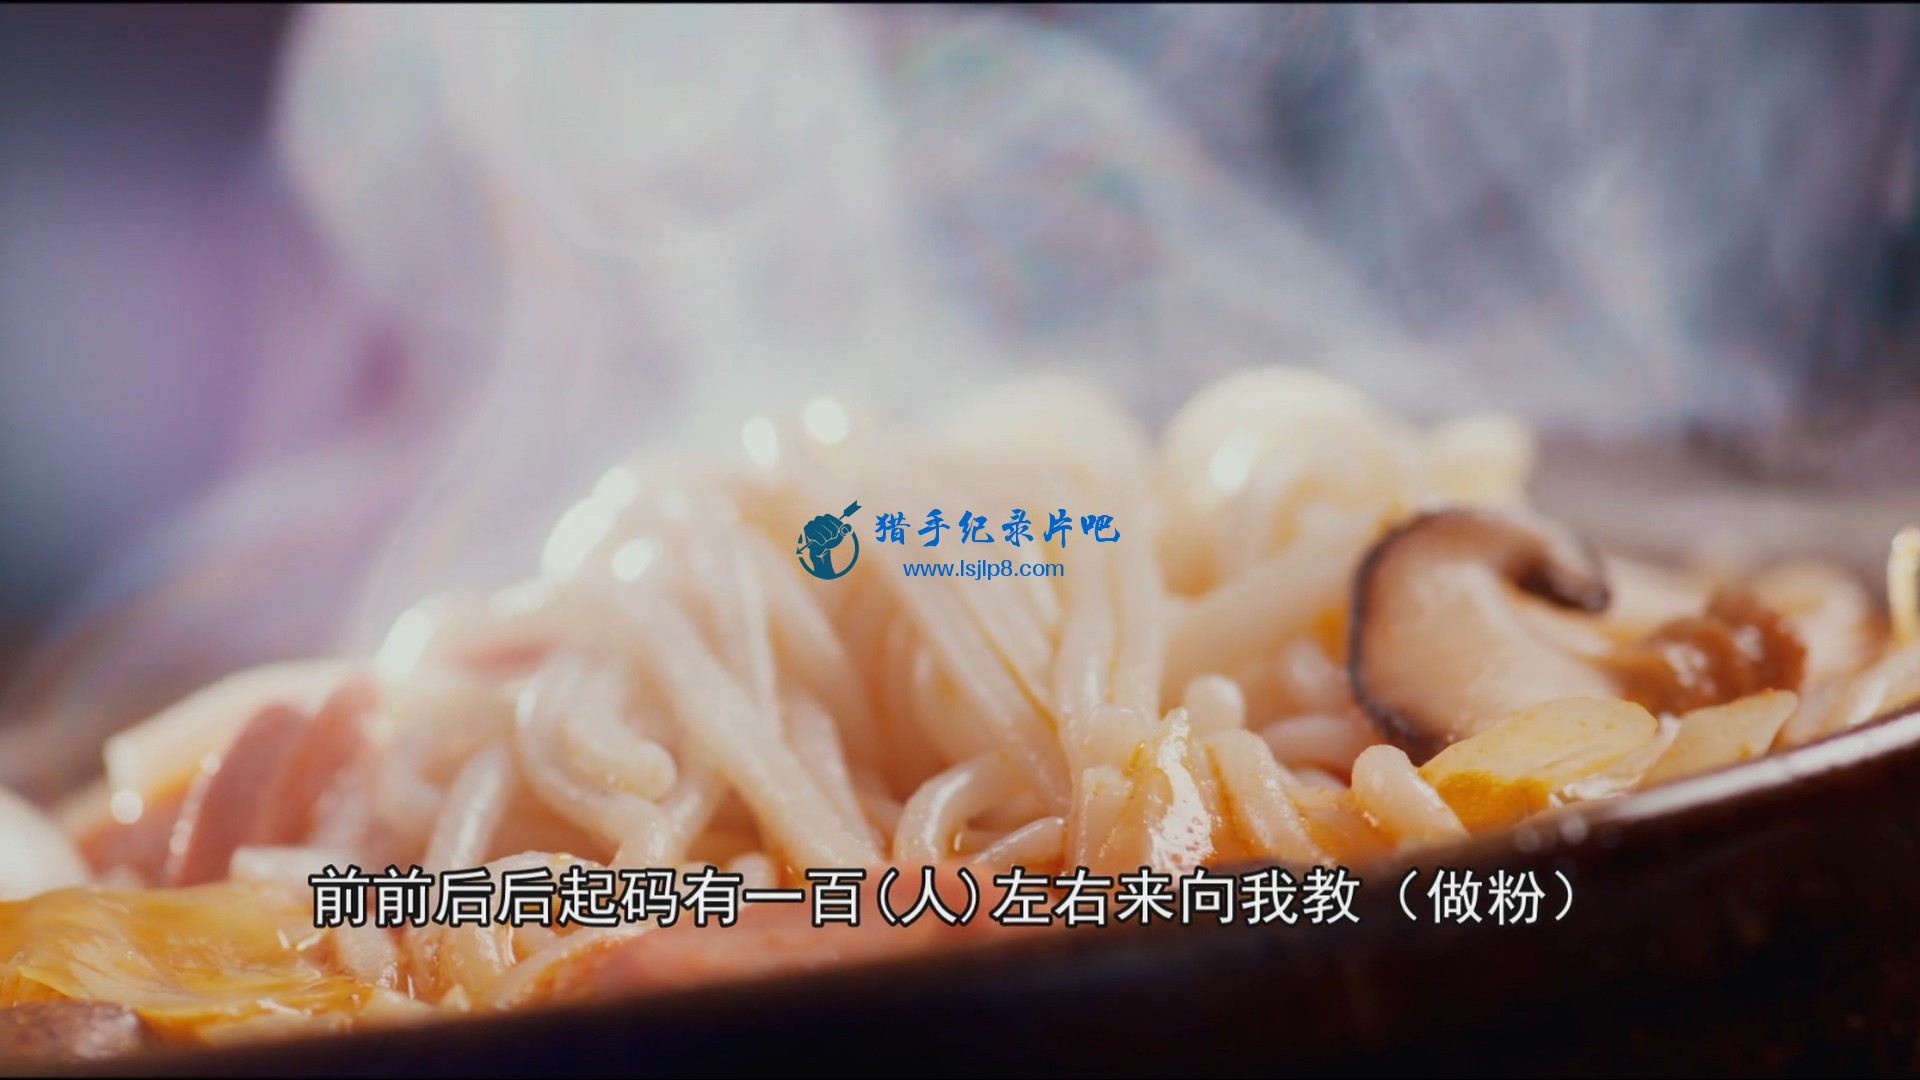 Breakfast in China.2019.EP02.WEB-DL.1080p.HEVC.AAC-HQC.mp4_20190914_092246.085.jpg